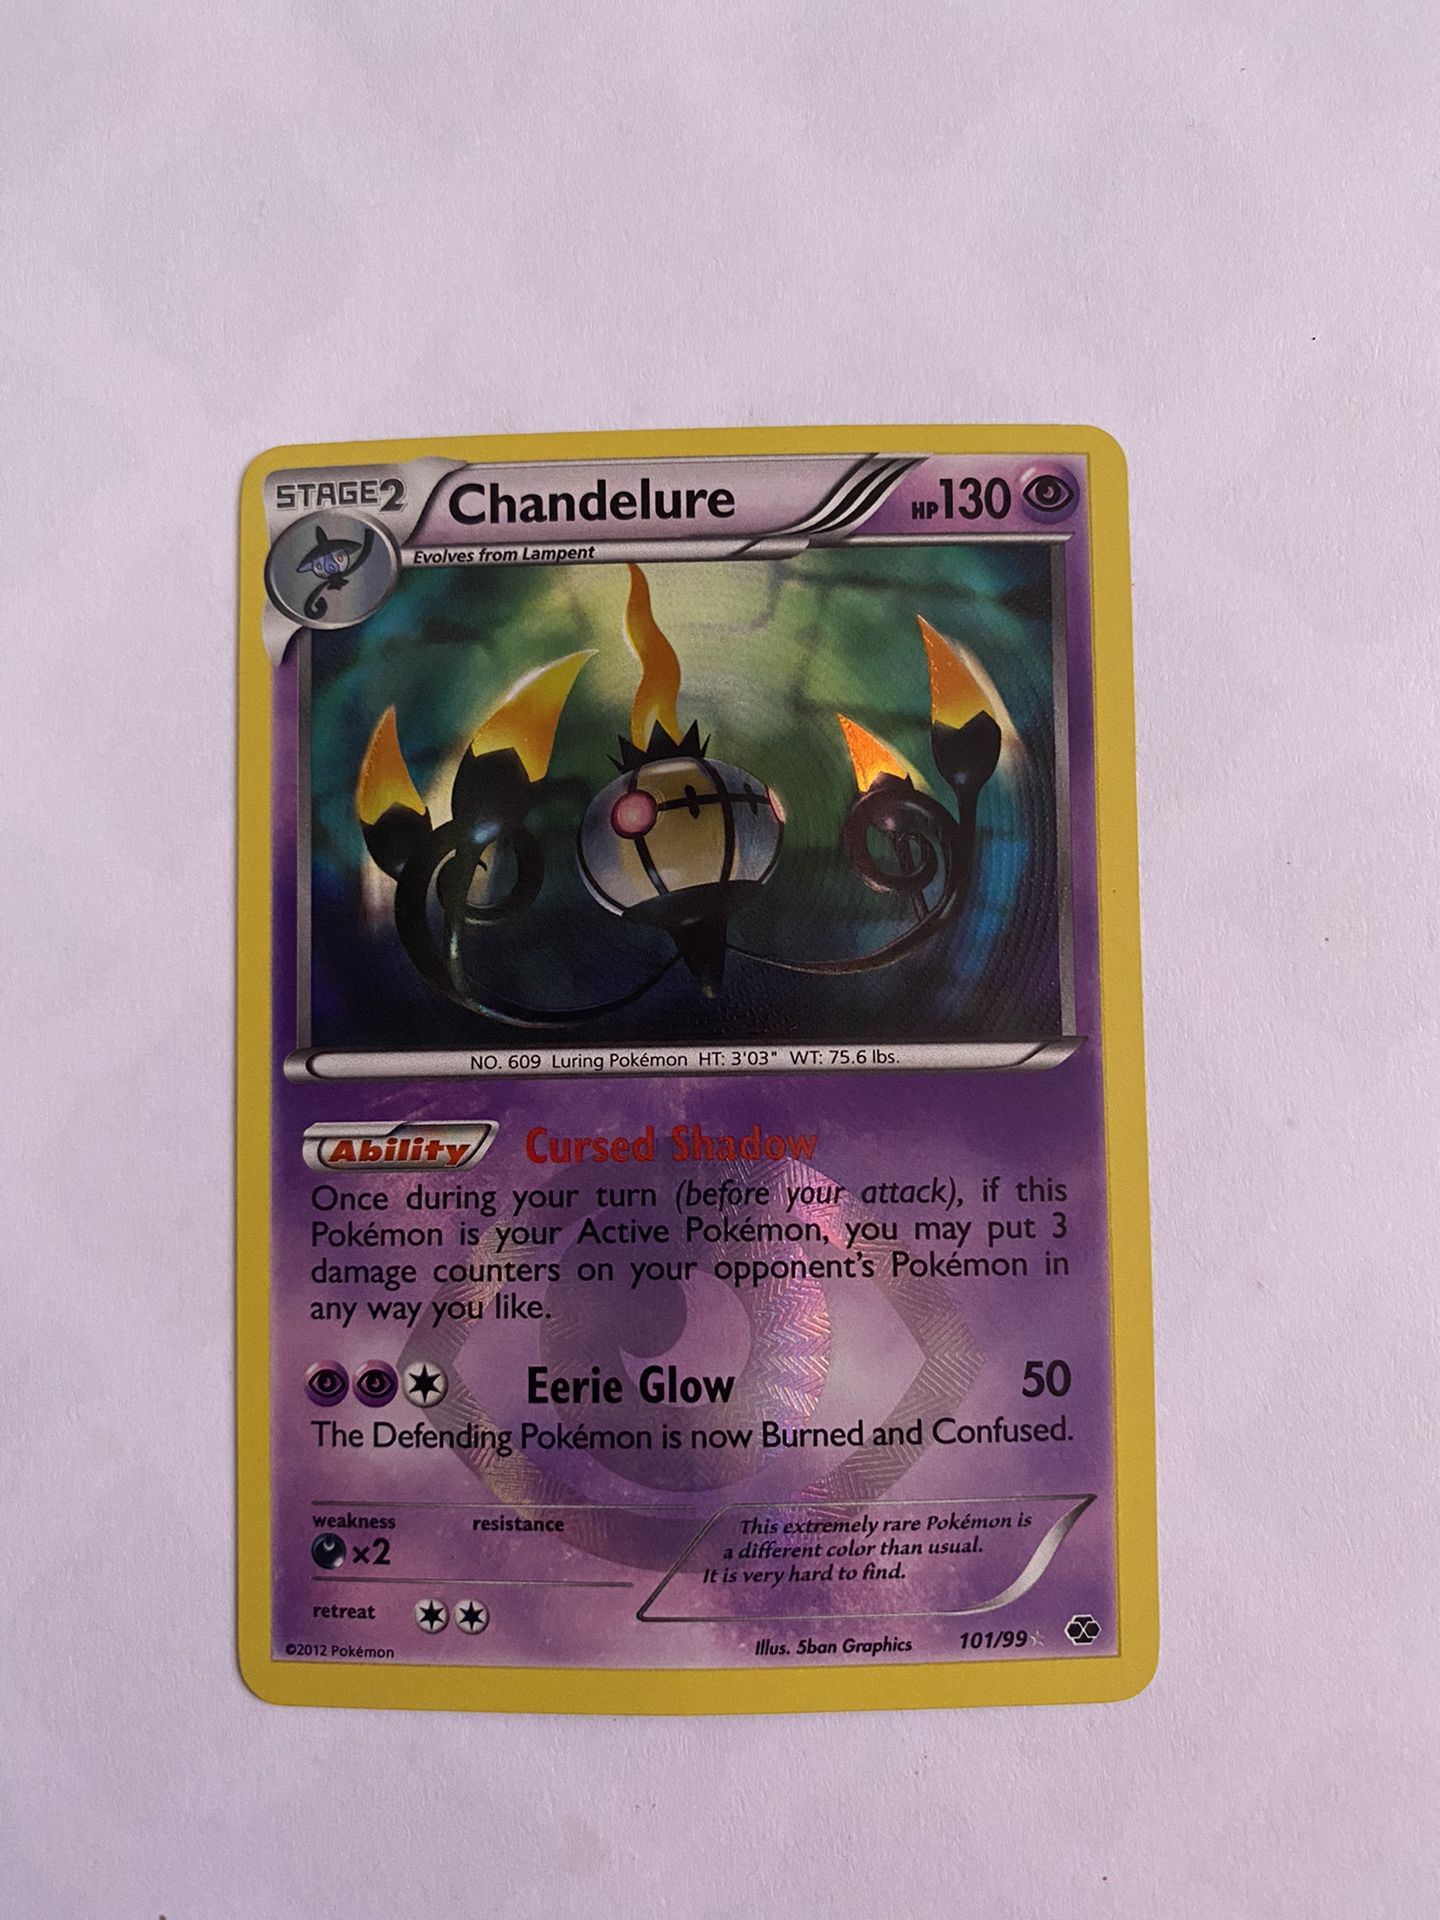 Holographic chandelure pokemon card